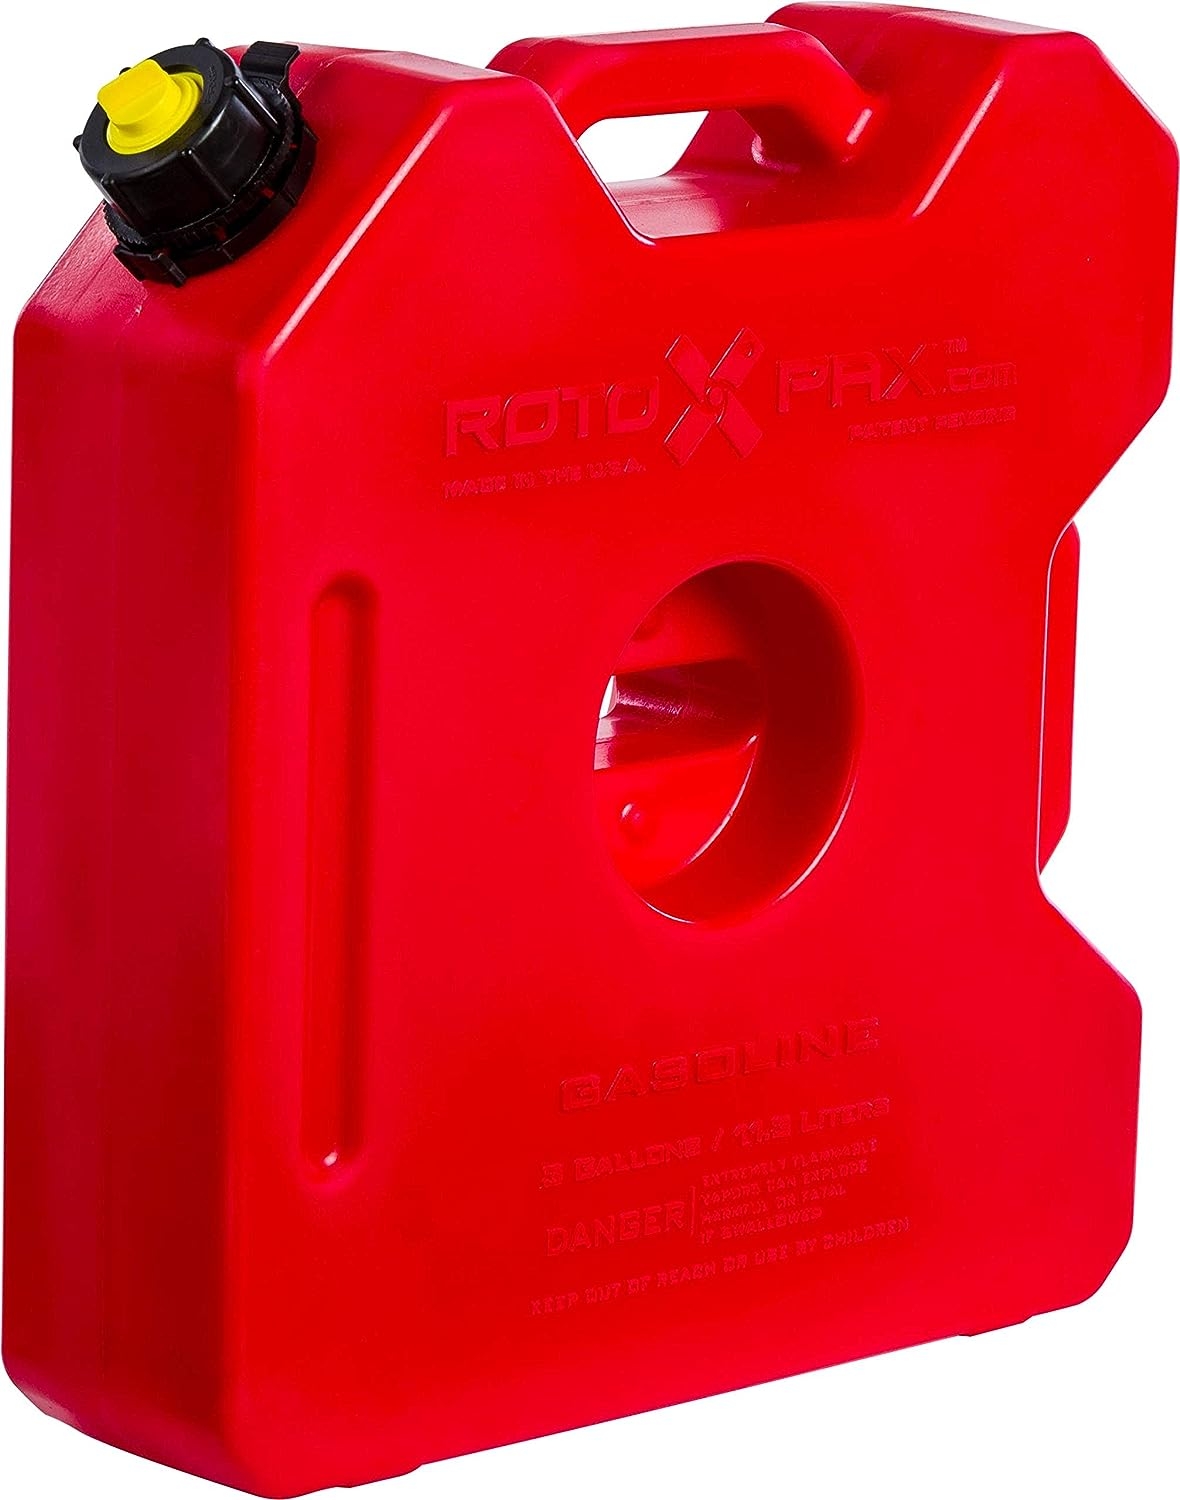 ROTOPAX Red 3 Gallon Gasoline Pack 17” x 16” x 5” RX-3G   price checker   price checker Description Gallery Reviews